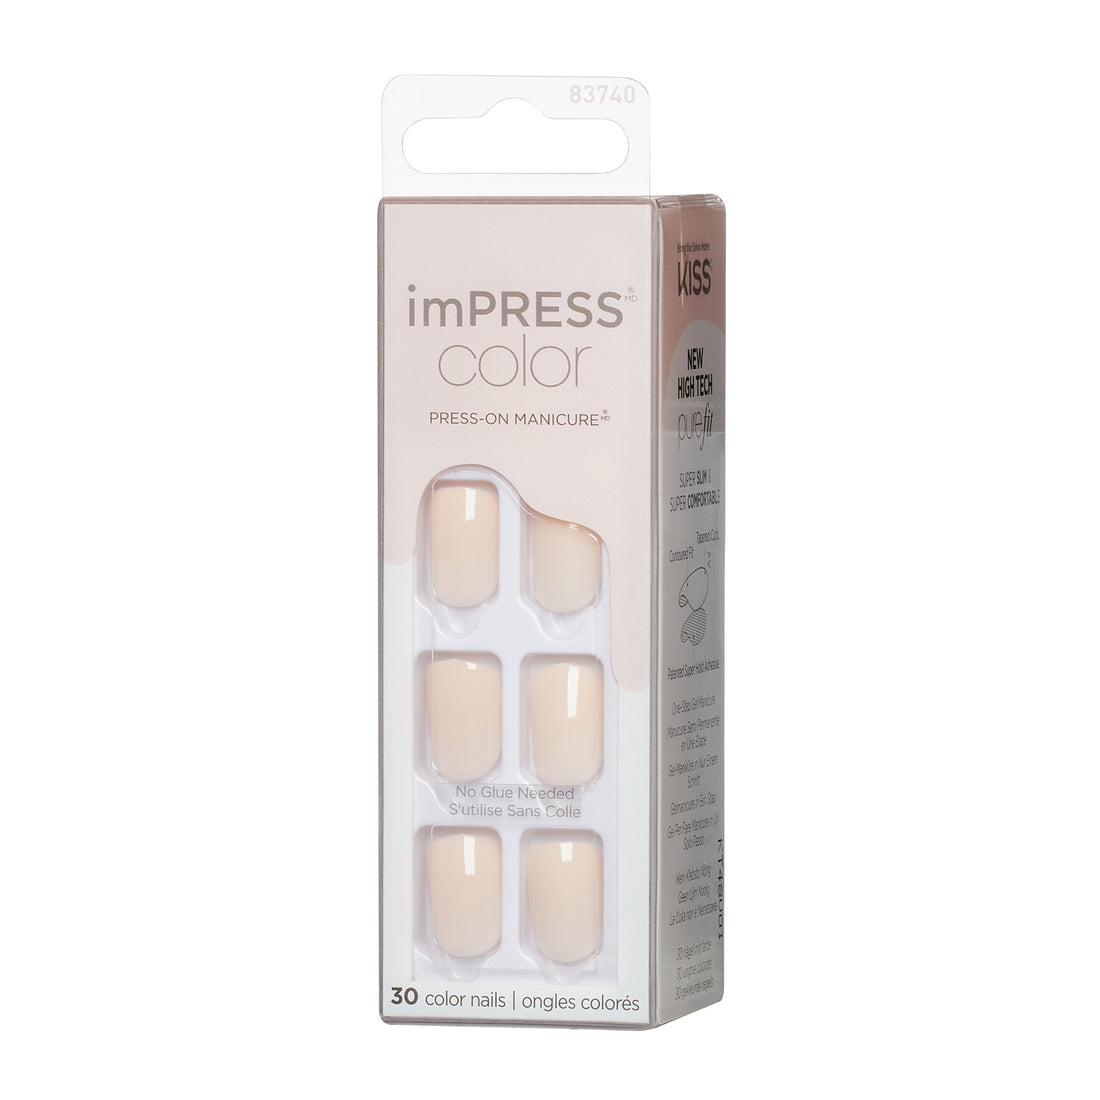 imPRESS Color Press-On Manicure - Point Pink